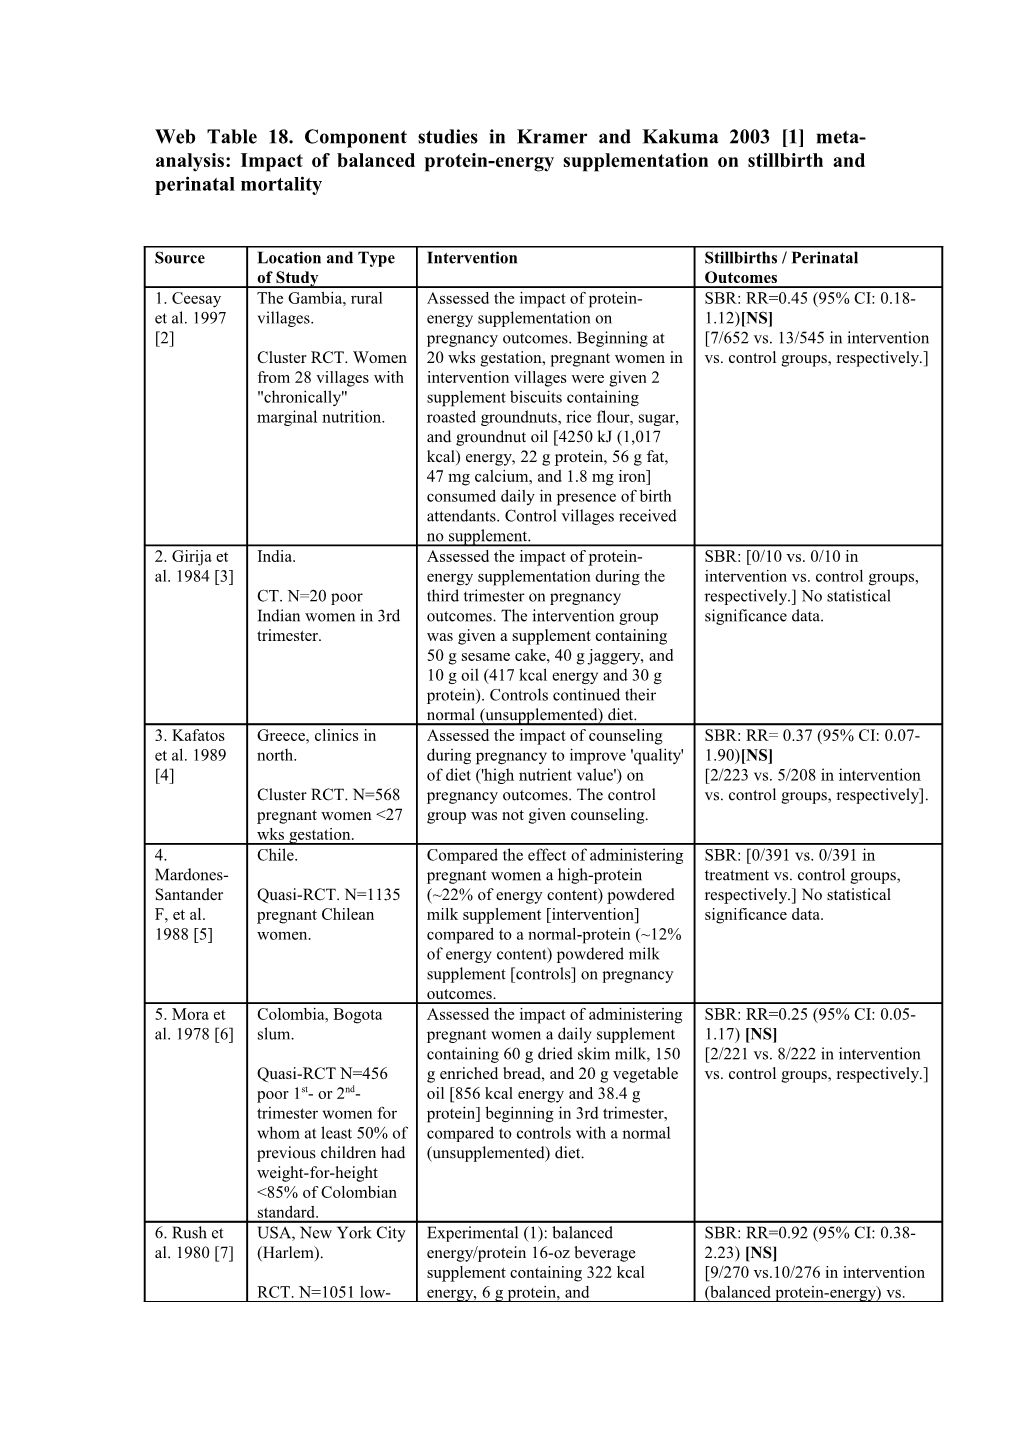 Web Table 18. Component Studies in Kramer and Kakuma 2003 1 Meta-Analysis: Impact of Balanced